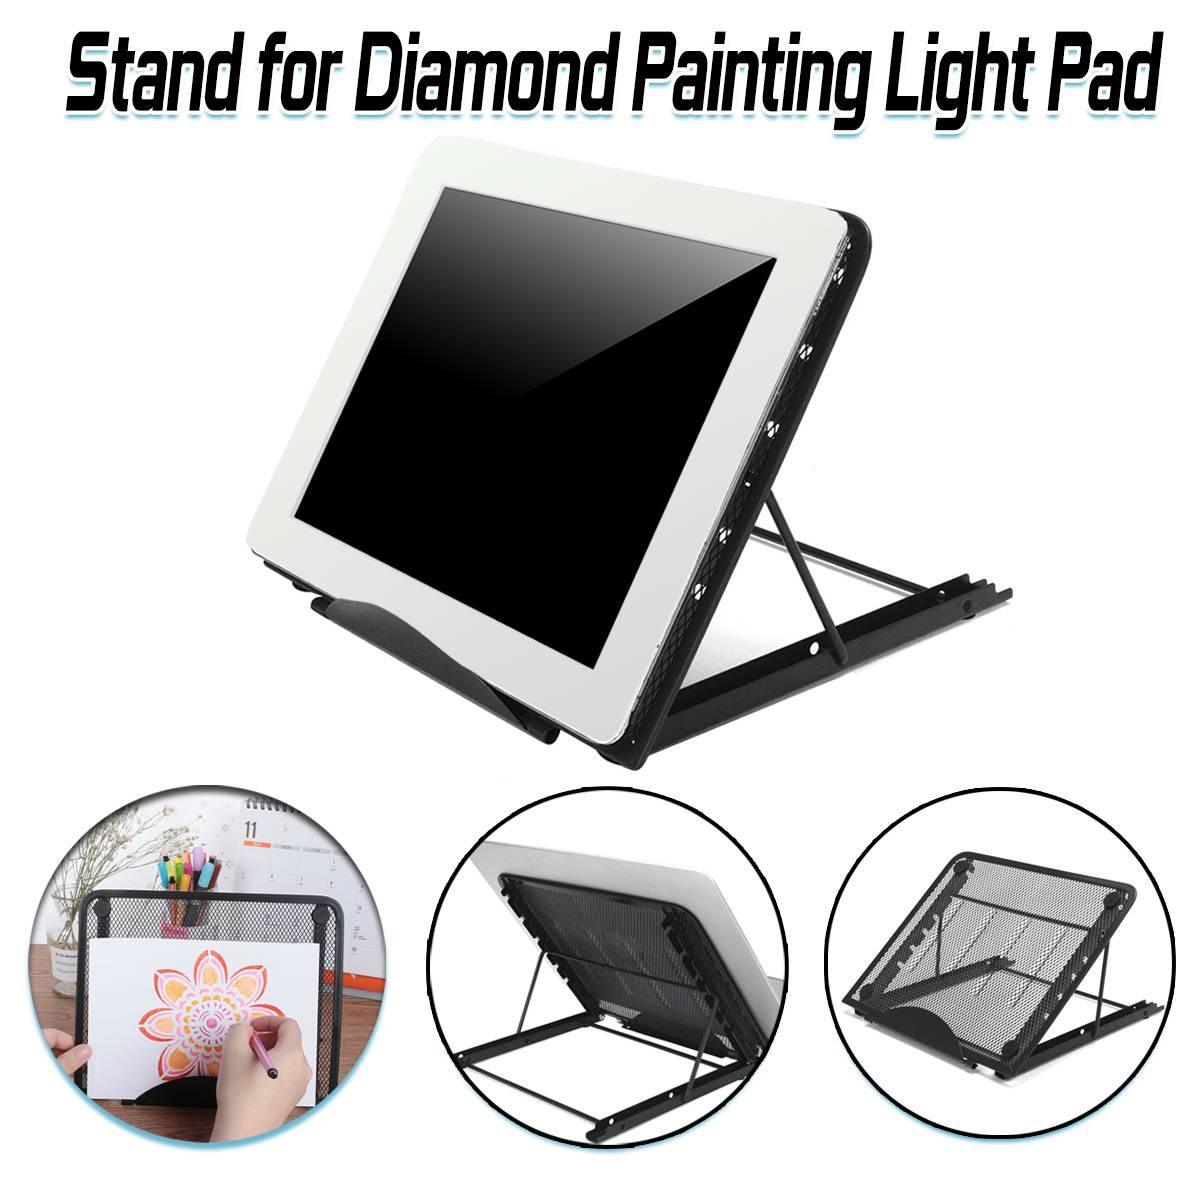 LED-Lichtpad-Halter für Diamond Painting - Diamond Painting